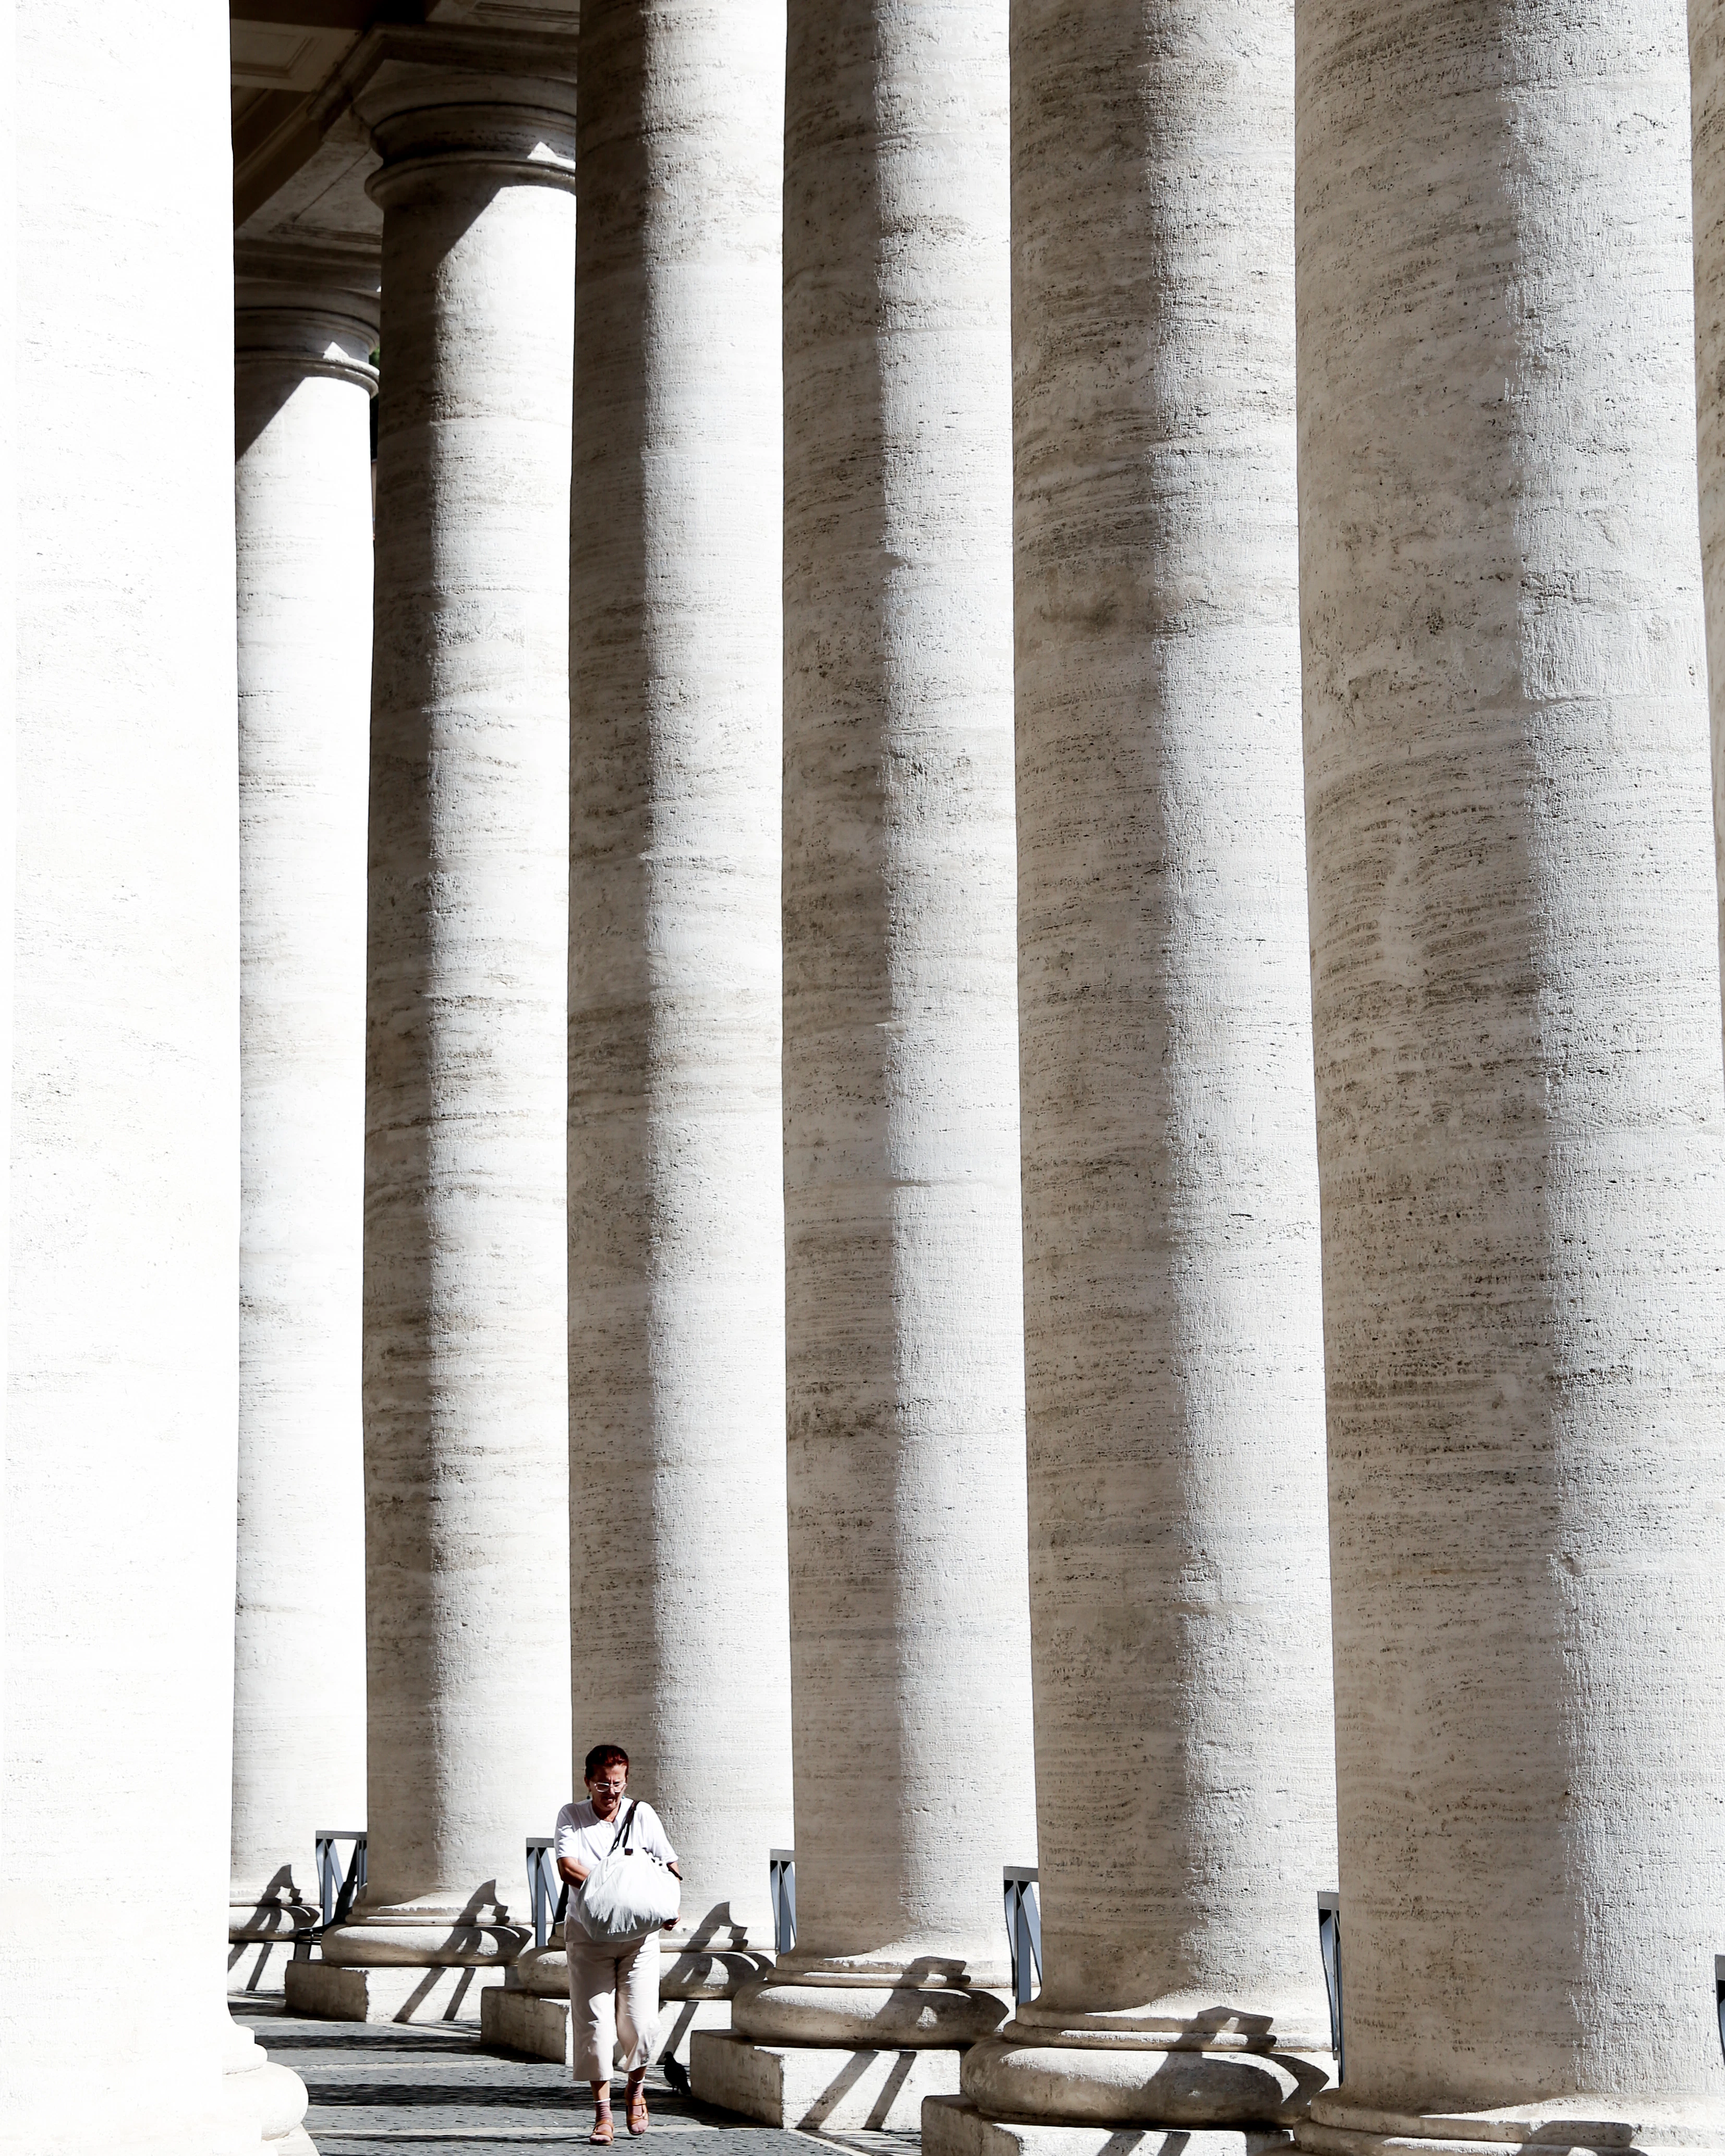 A colonnade in Rome | Crosta & Mollica